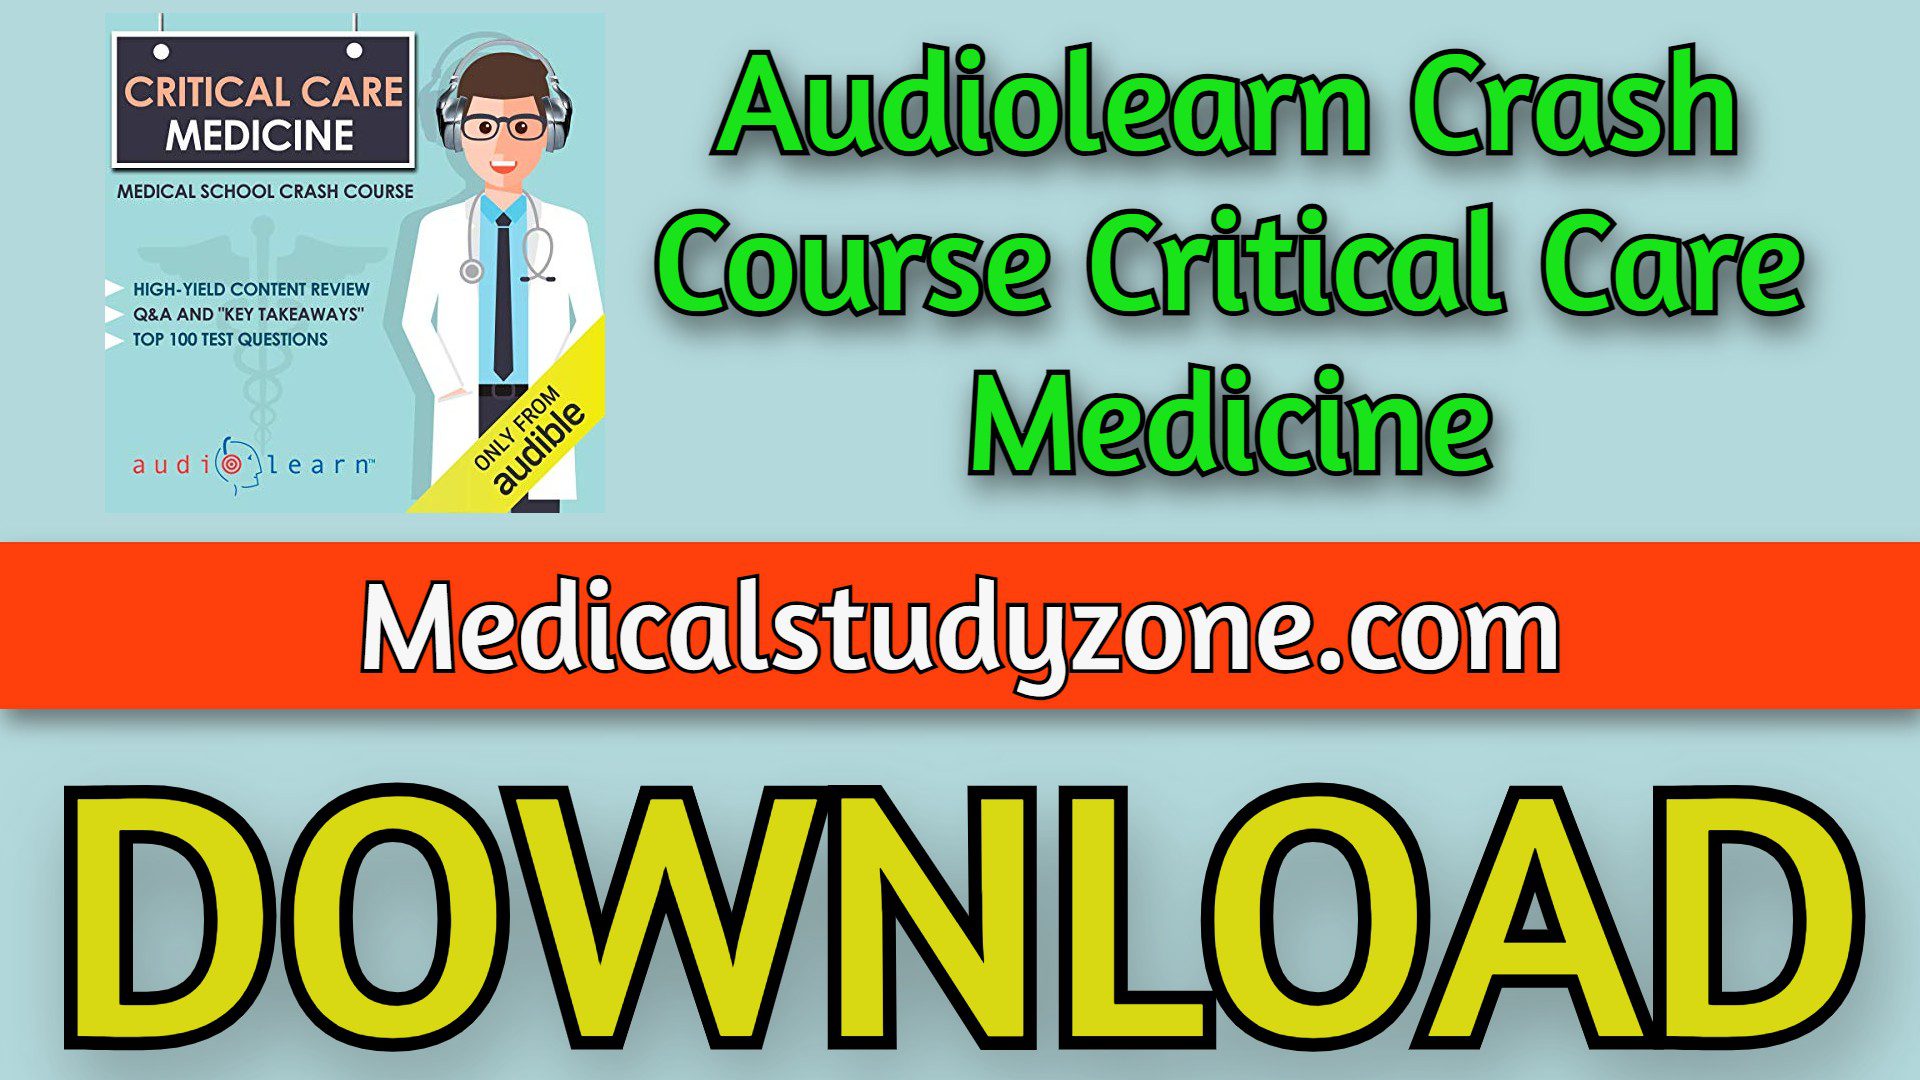 Audiolearn Crash Course Critical Care Medicine 2021 Free Download